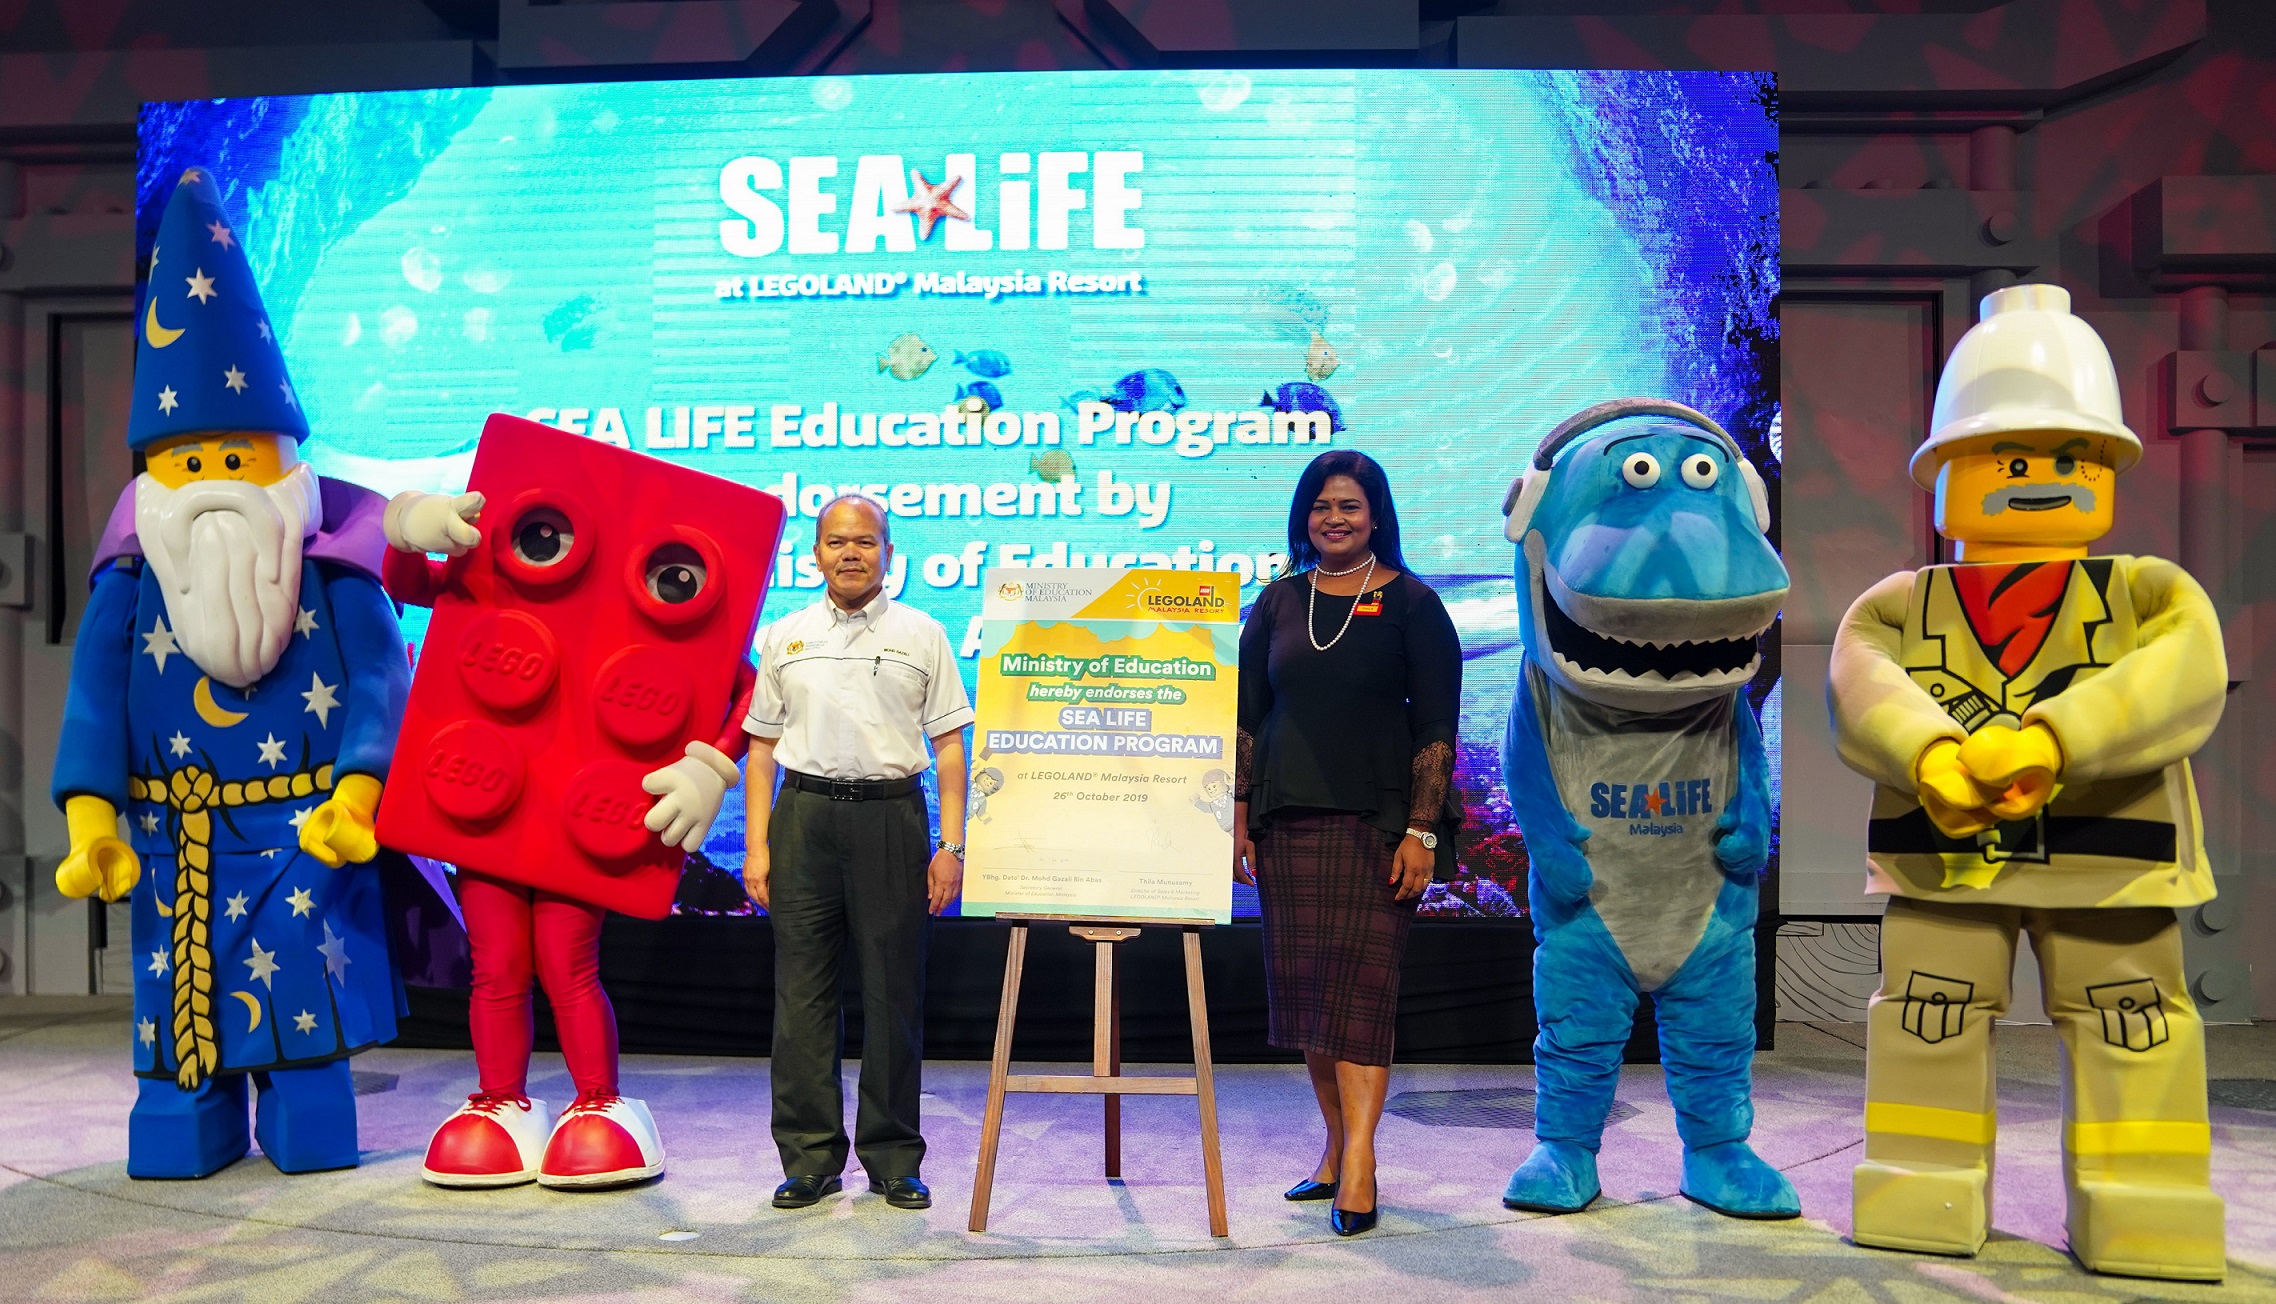 Ministry of Education Endorses SEA LIFE Education Program